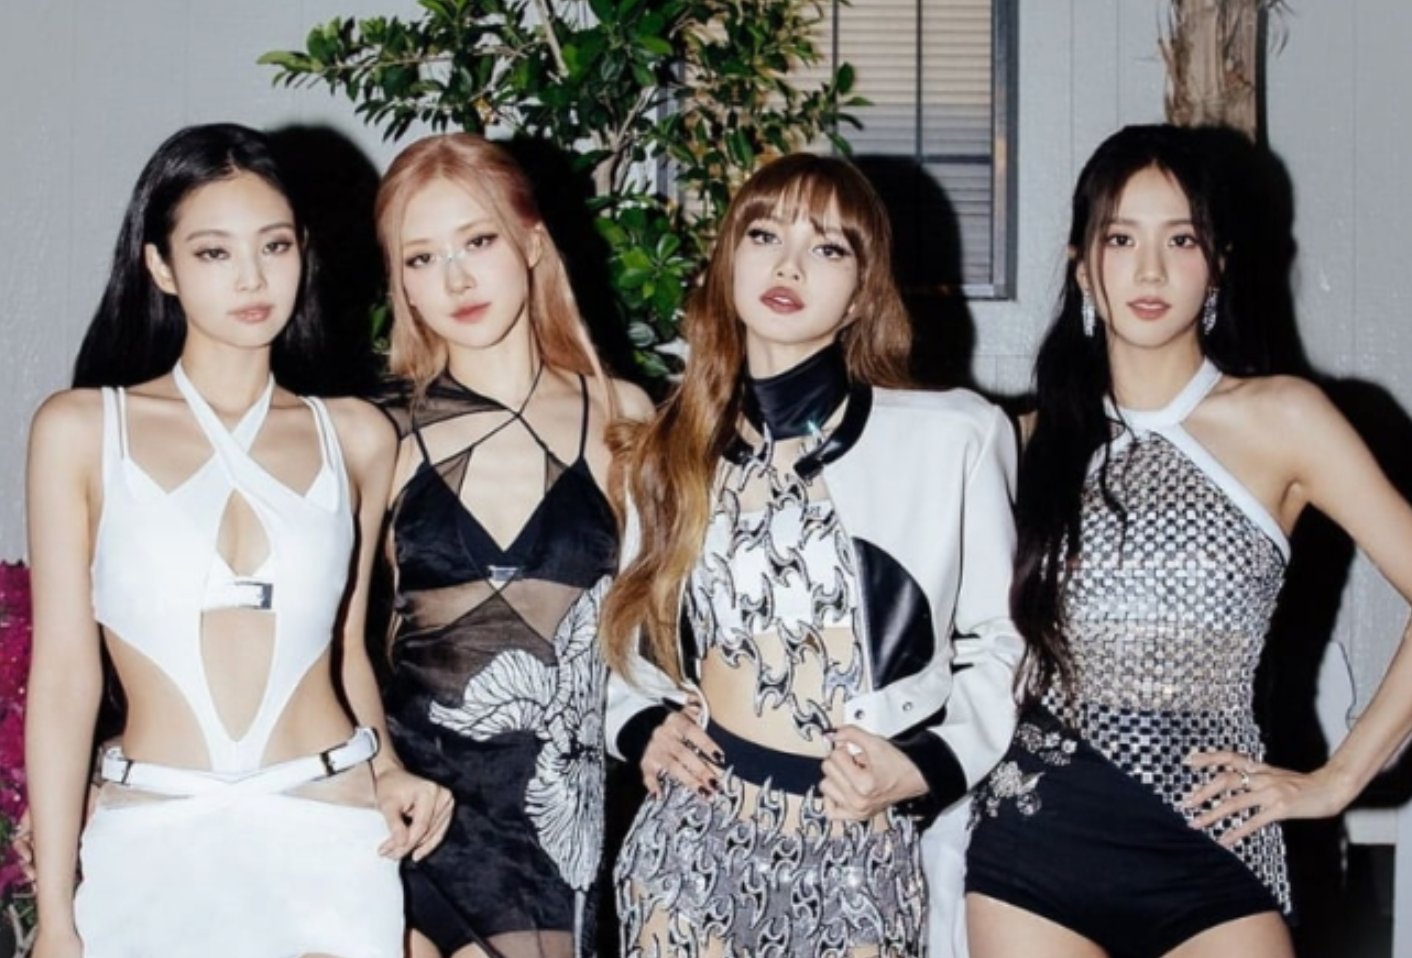 Is Blackpink YG’s only “hope” for survival in harsh K-pop industry?